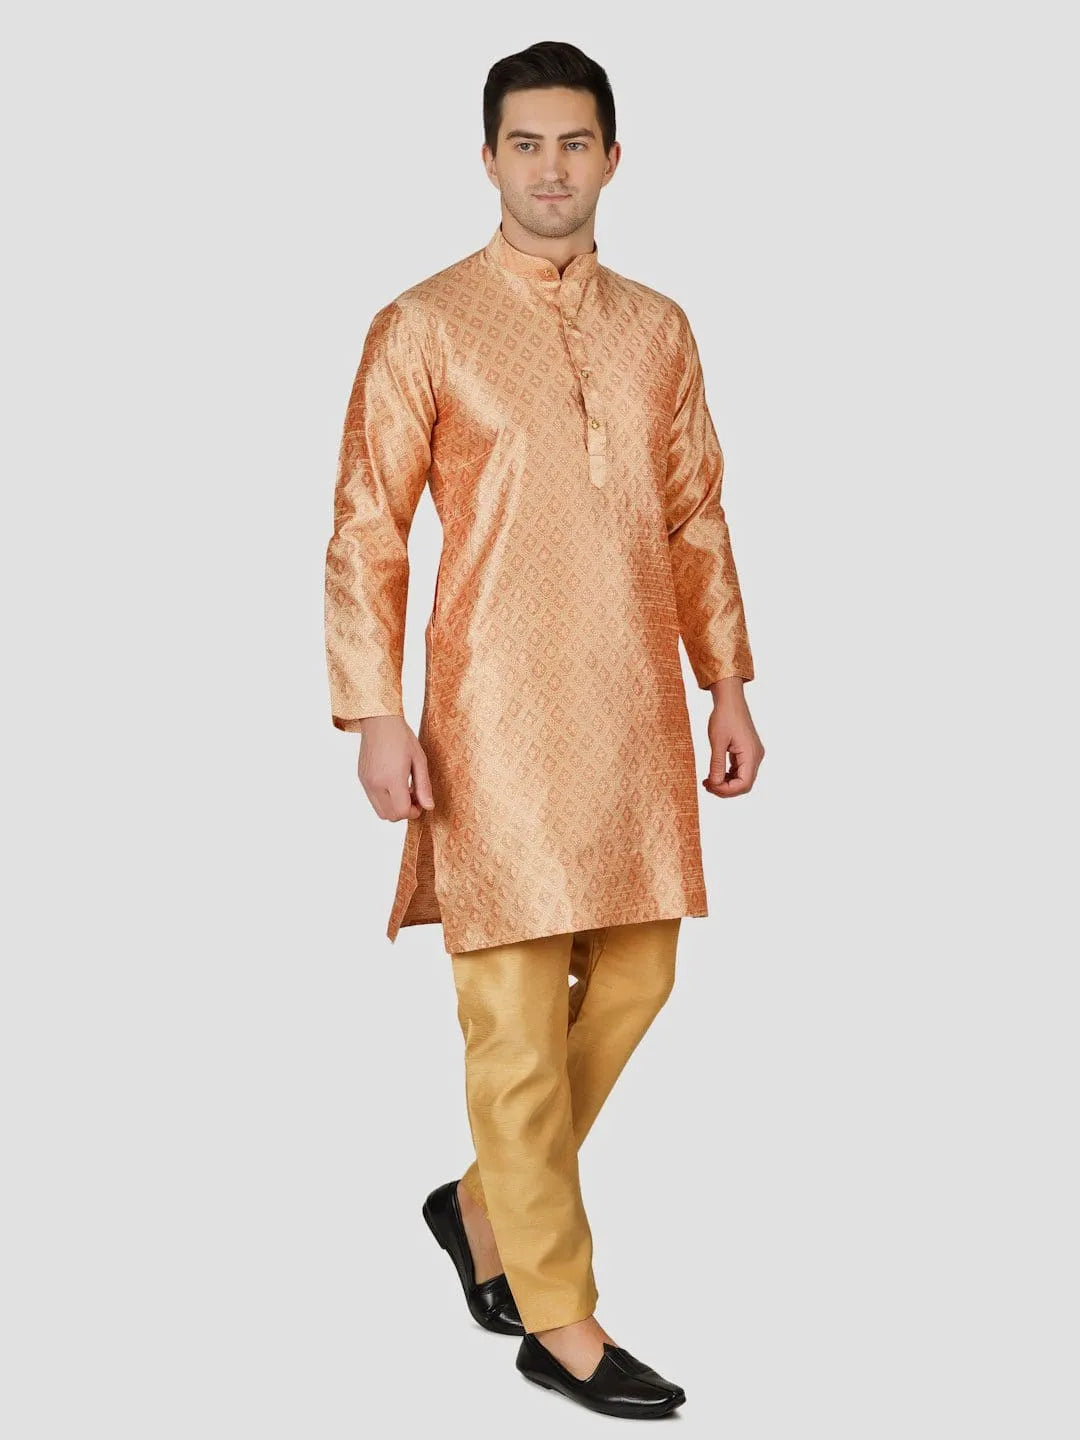 Printed Silk Ethnic Wear Kurta Pajama Set For Men’s